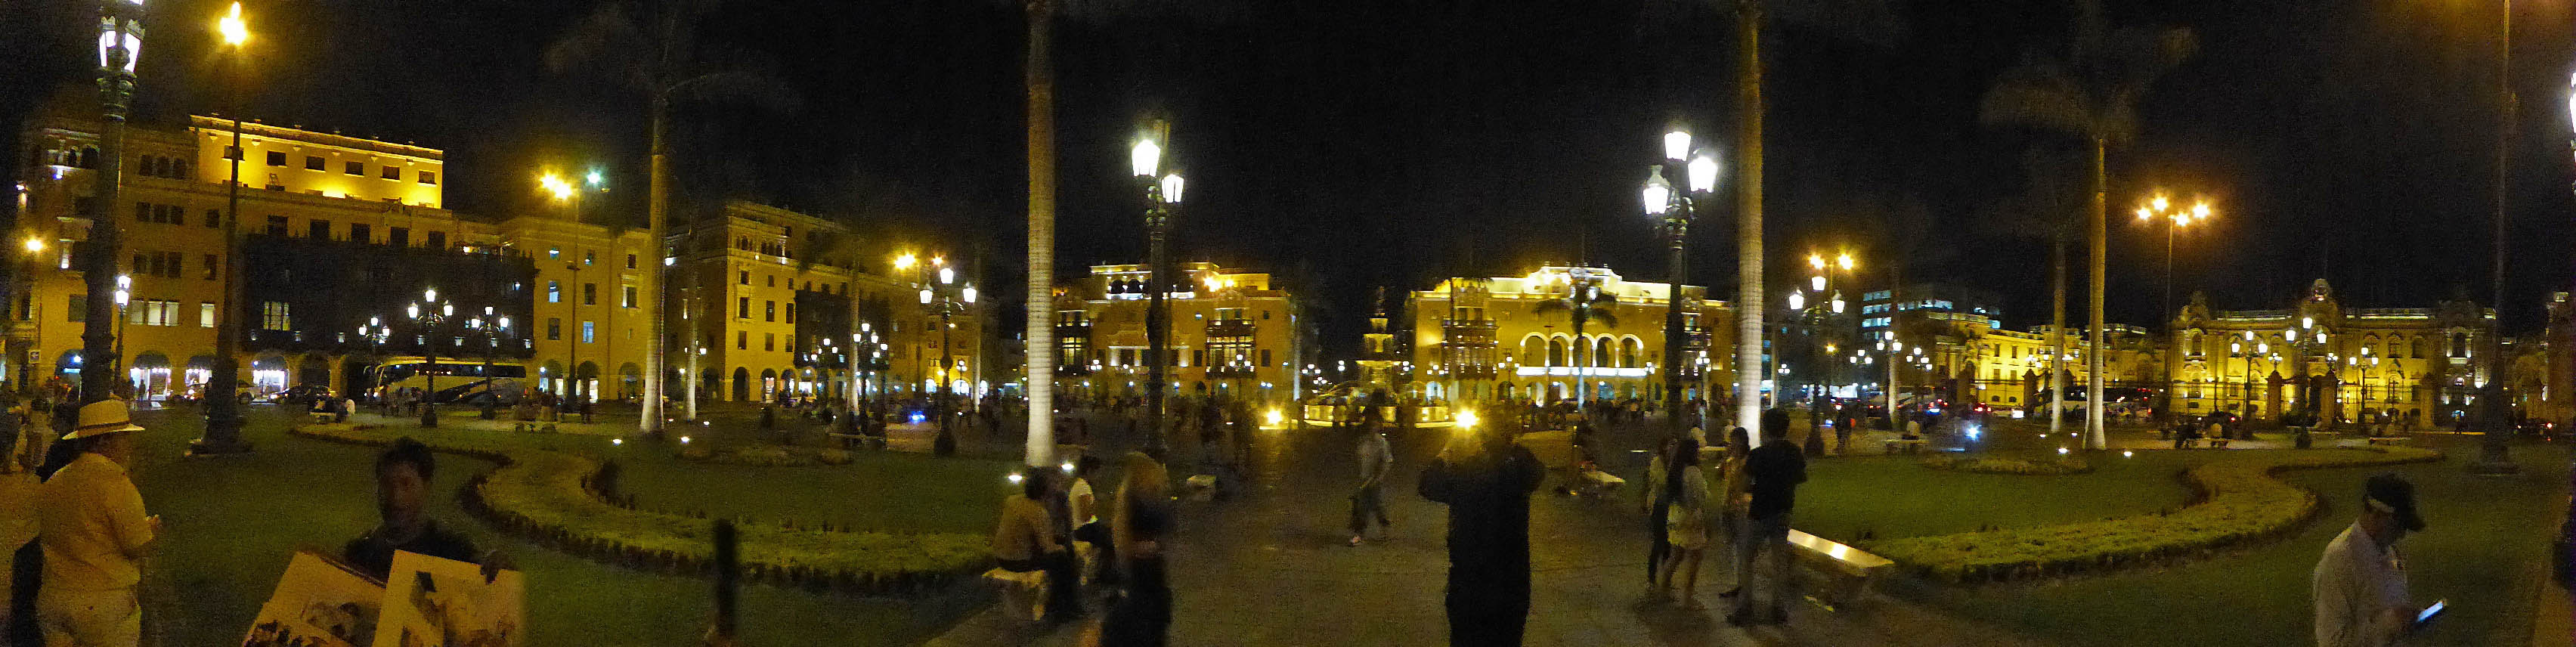 Panorama of Plaza Major at Night in Lima, Peru